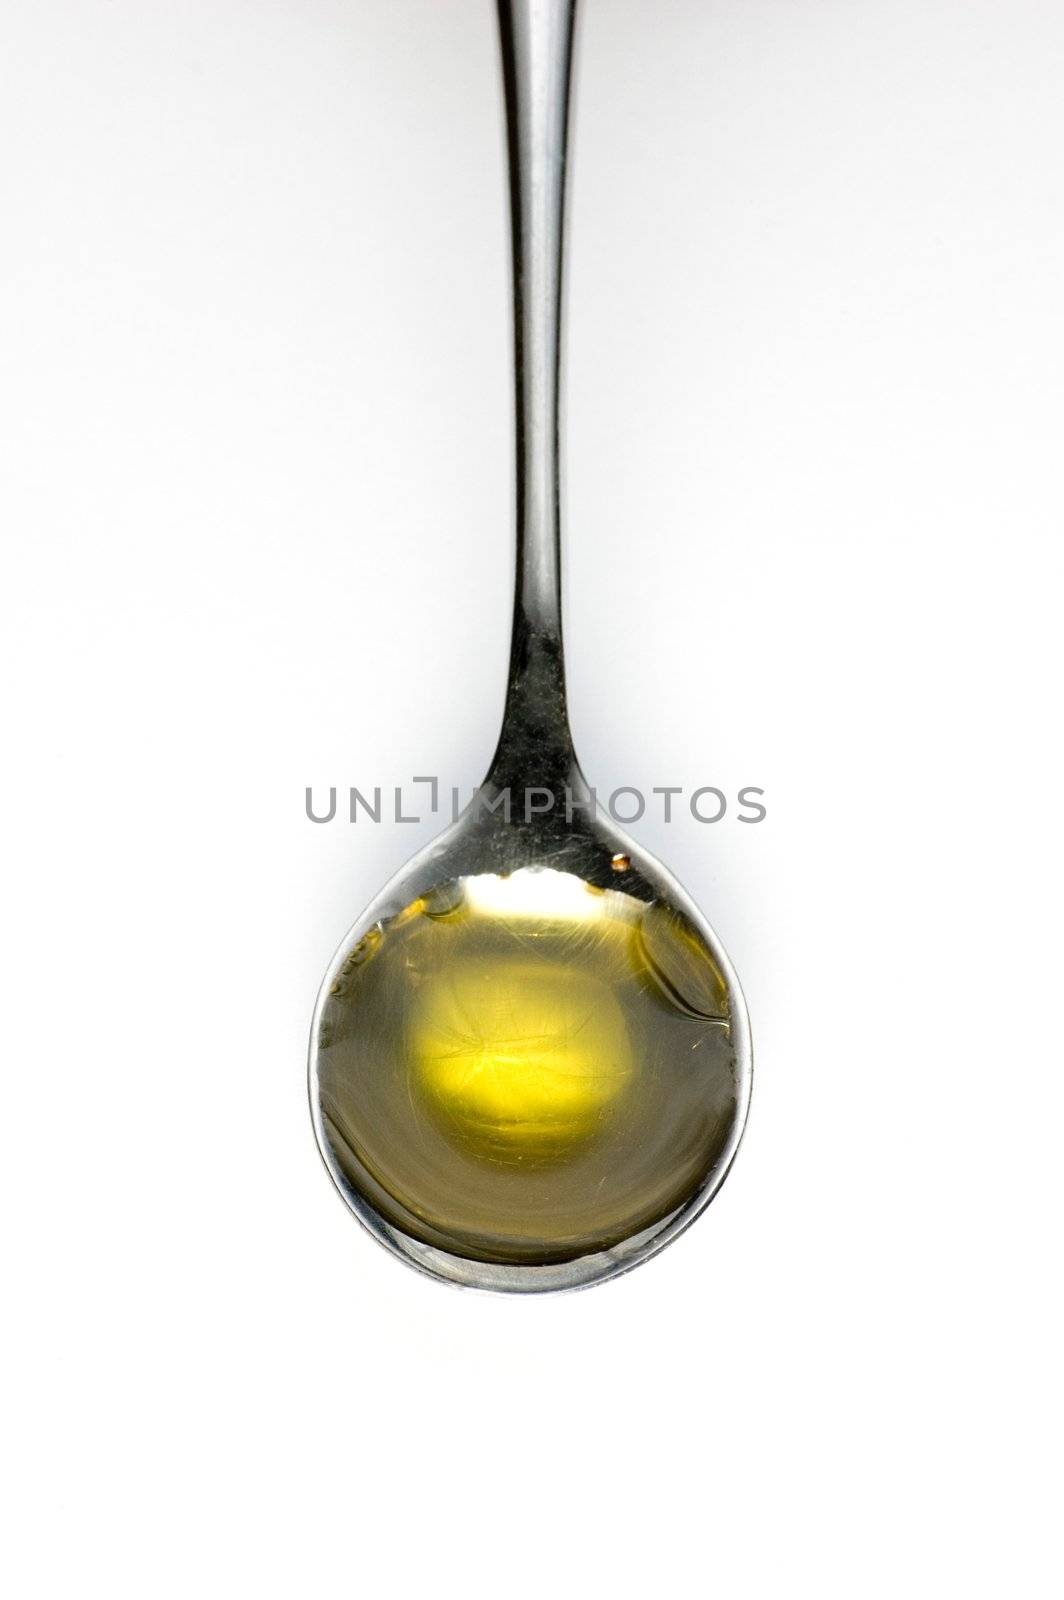 Teaspoon of olive oil isolated on white